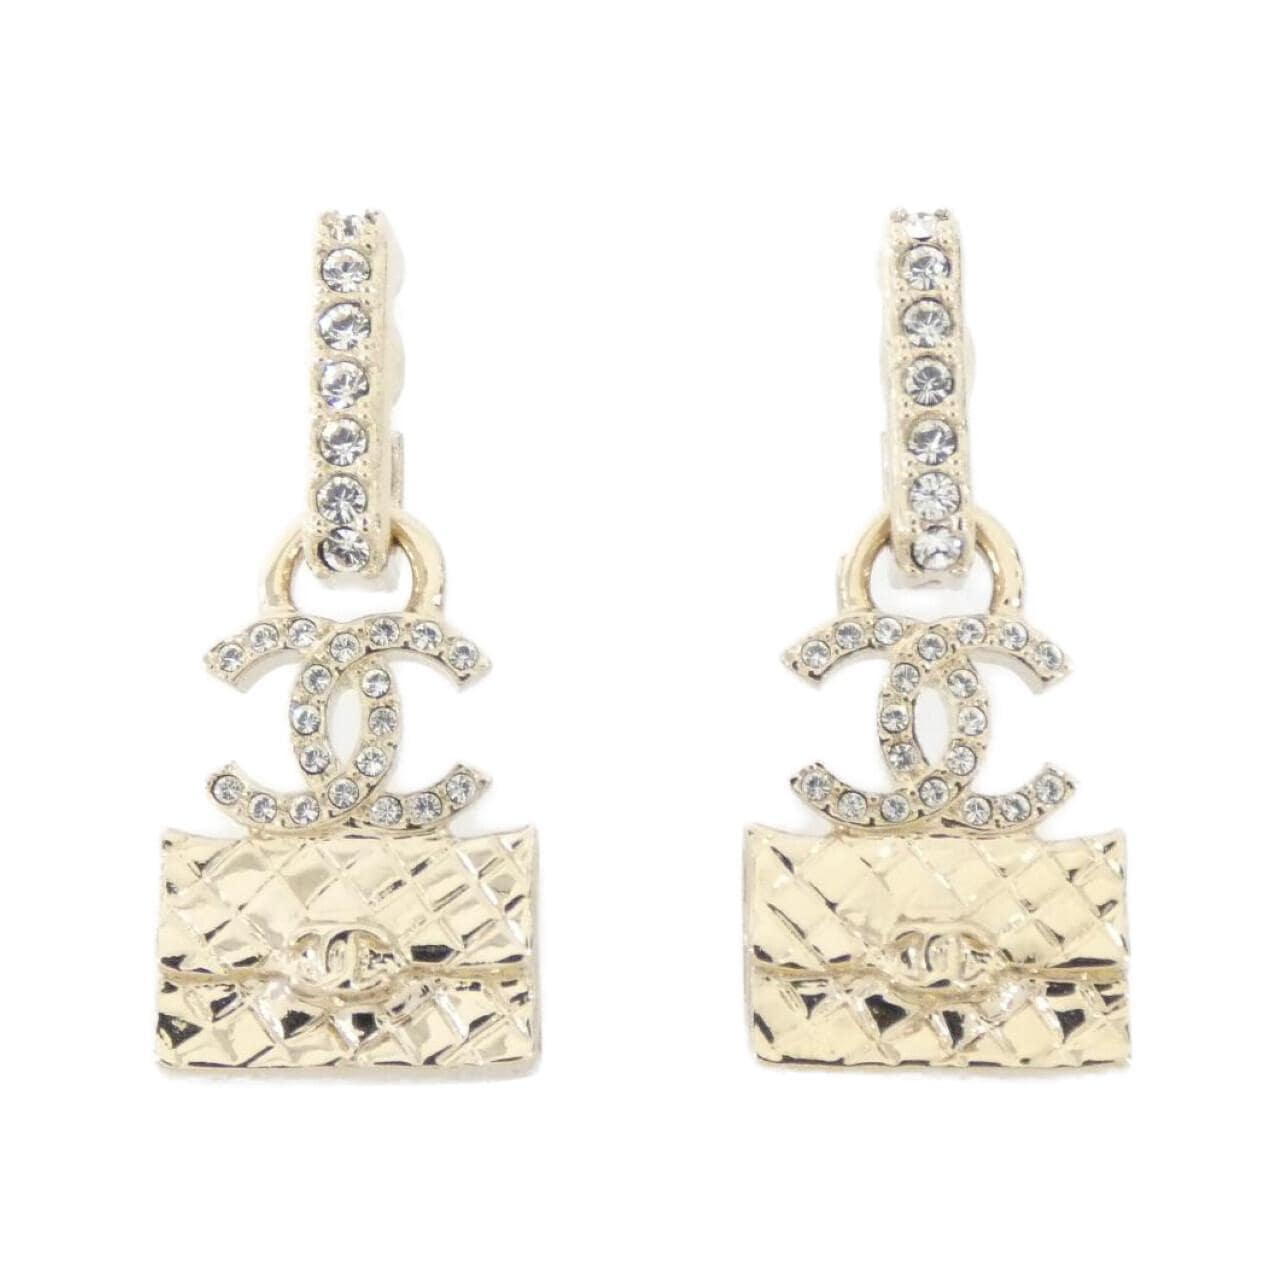 [Unused items] CHANEL ABB537 earrings